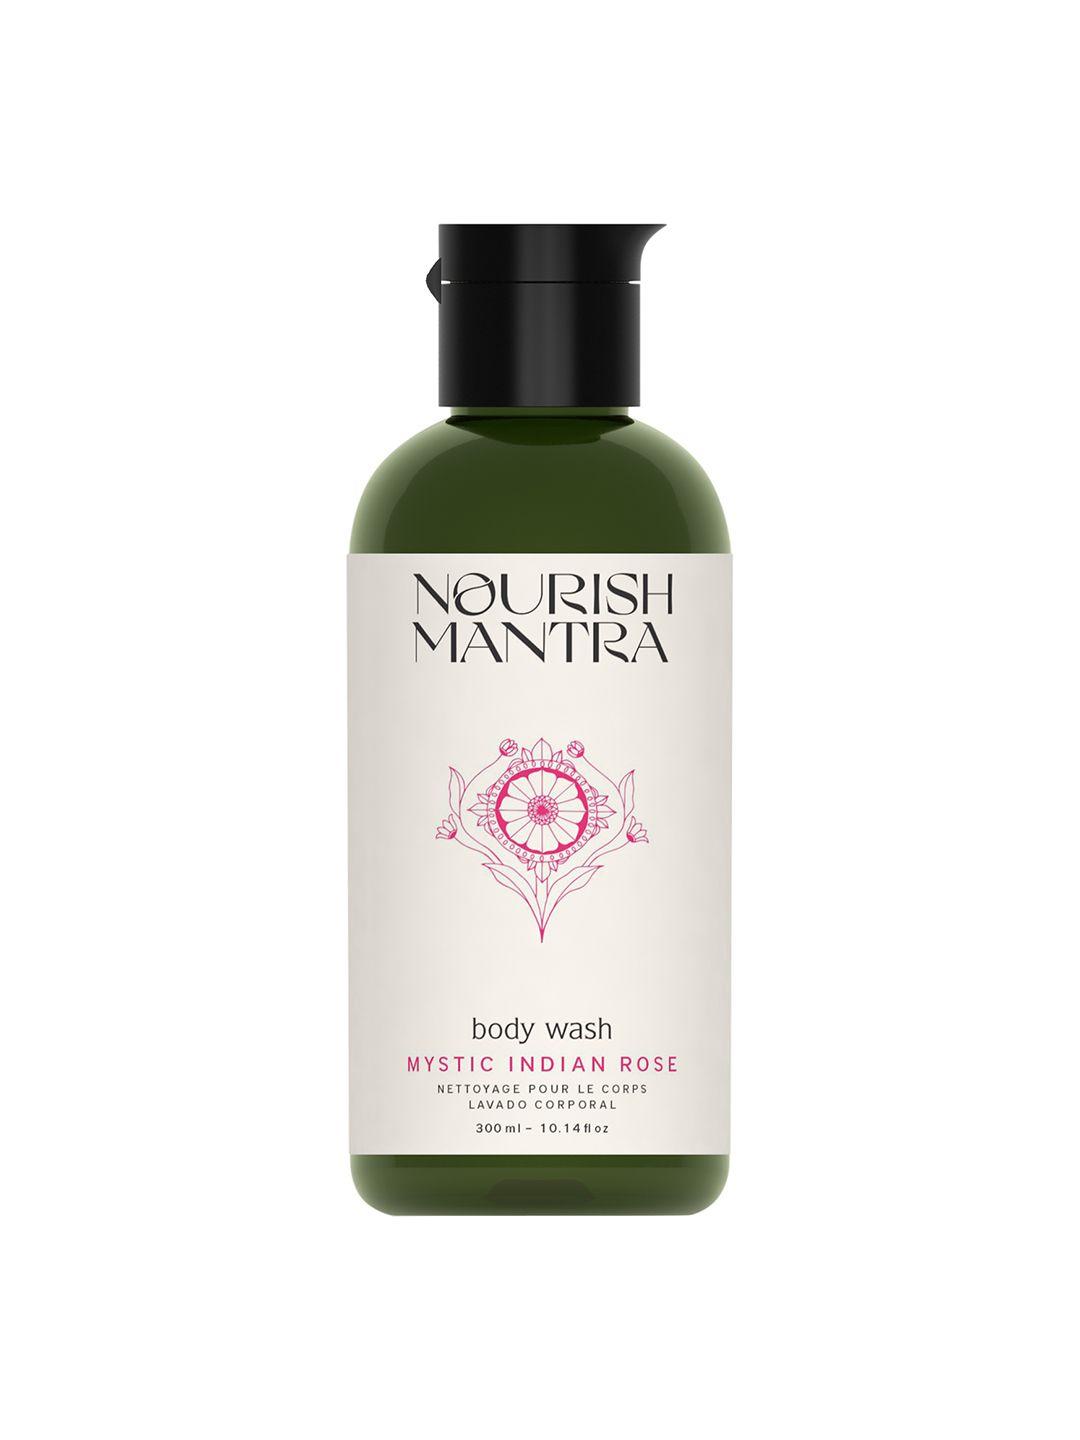 Nourish Mantra Black Pepper Oil Mystic Indian Rose Body Wash - 300 ml